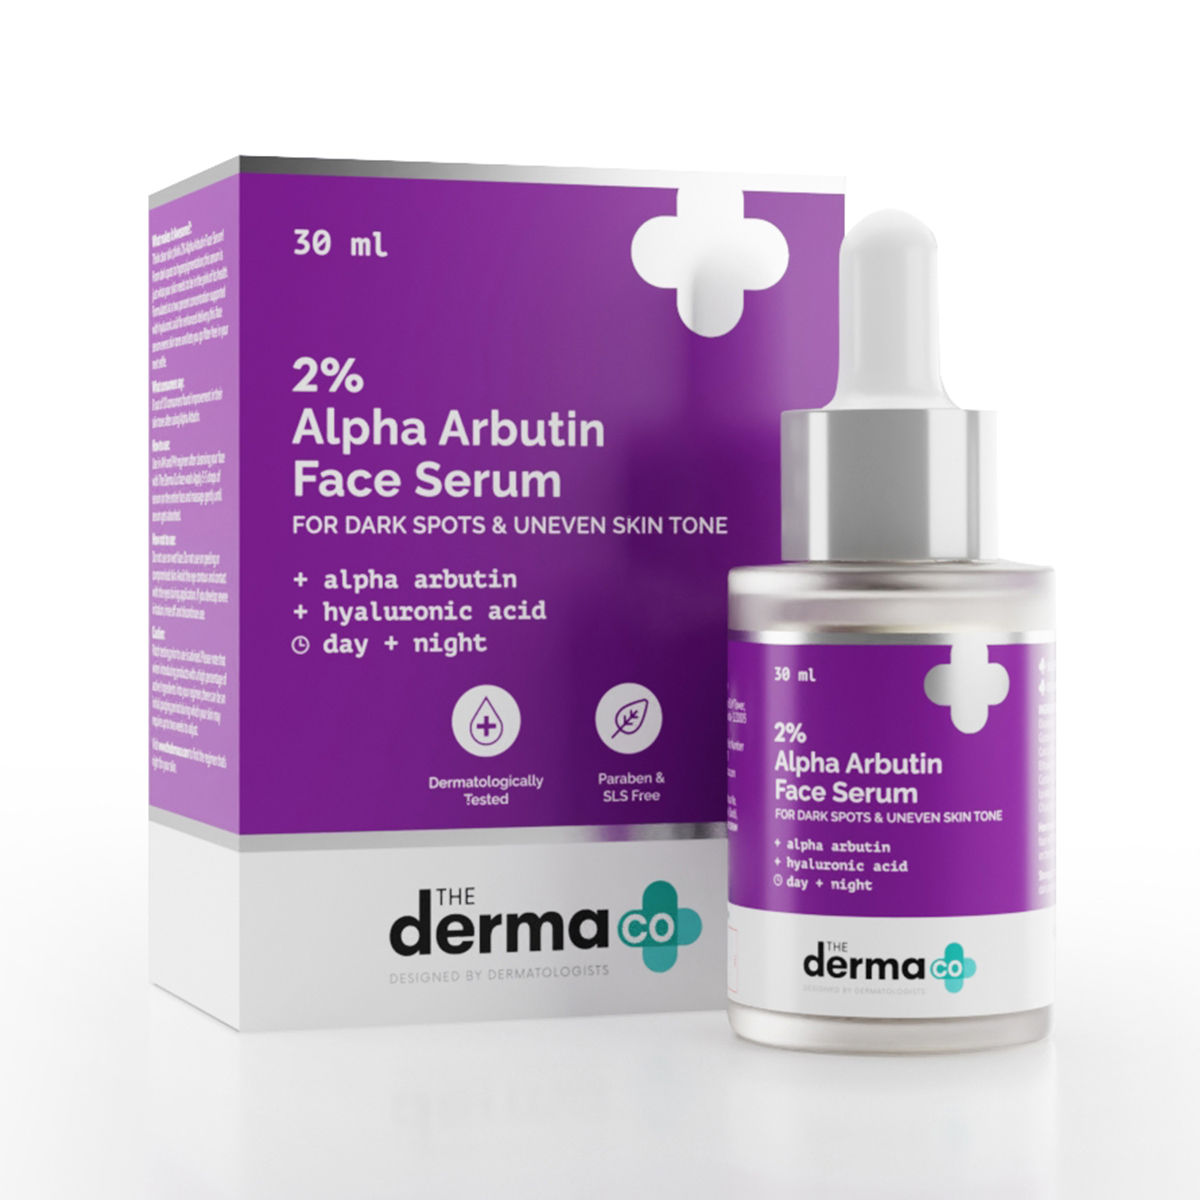 The Derma Co. 2% Alpha Arbutin Face Serum For Dark Spots & Uneven Skin Tone